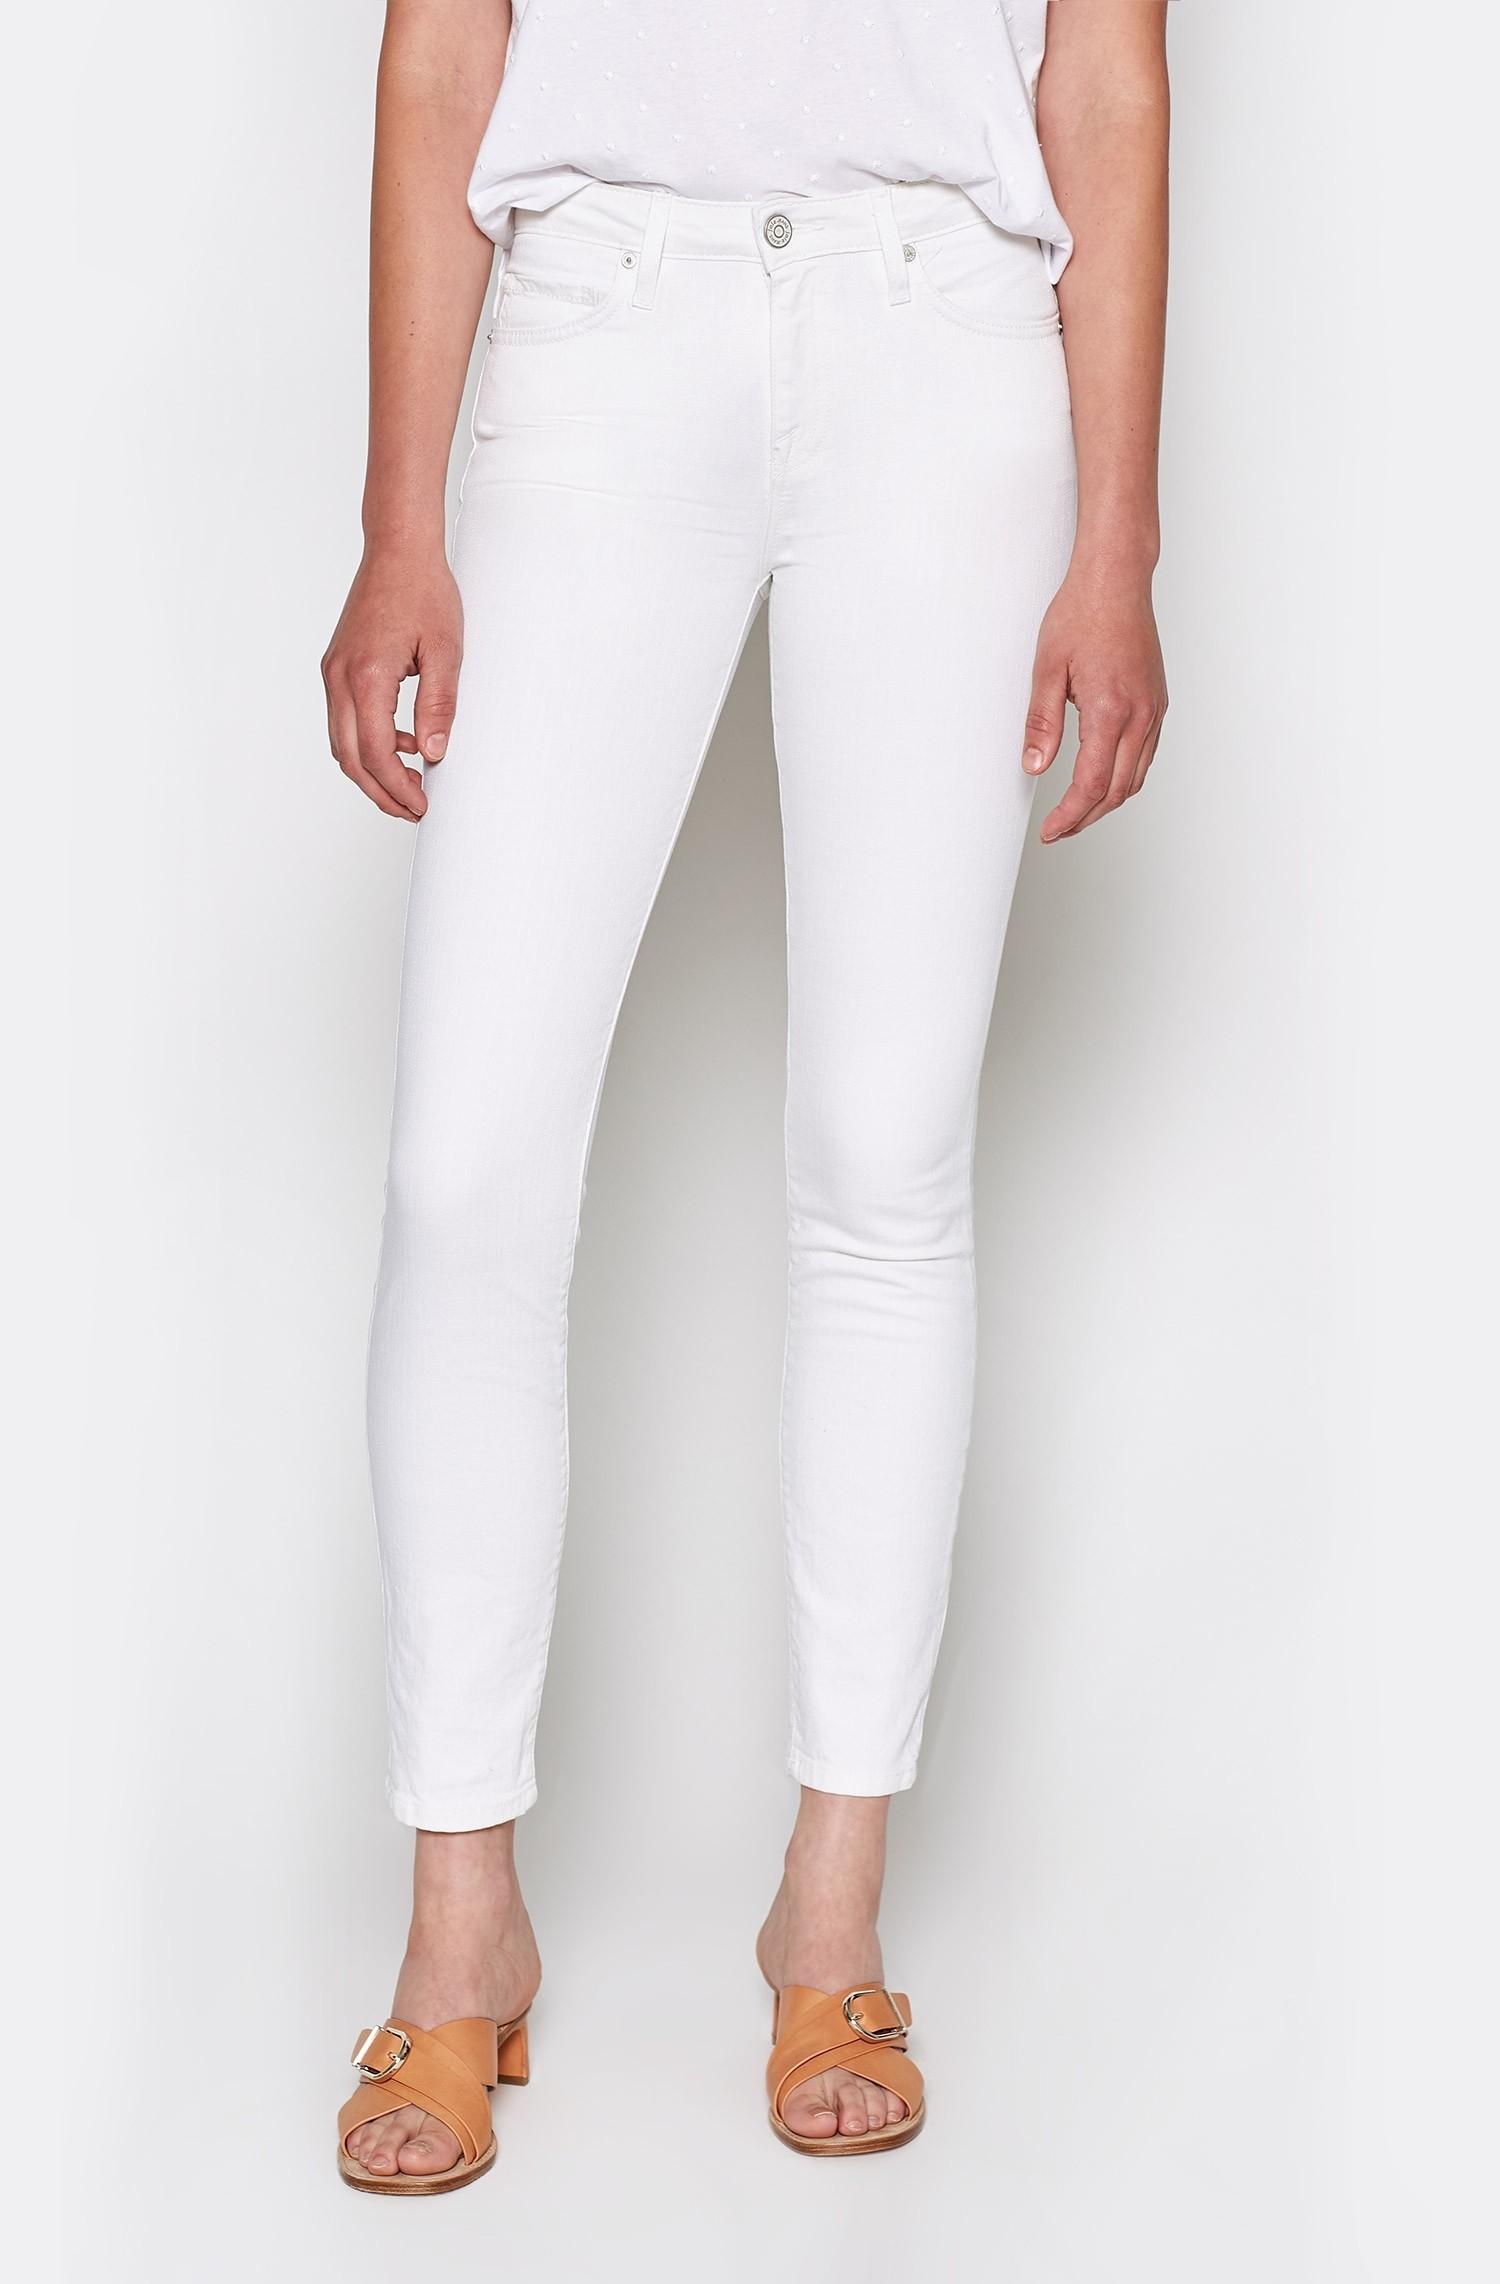 Joie Denim Mid Rise Skinny Jeans in White - Lyst